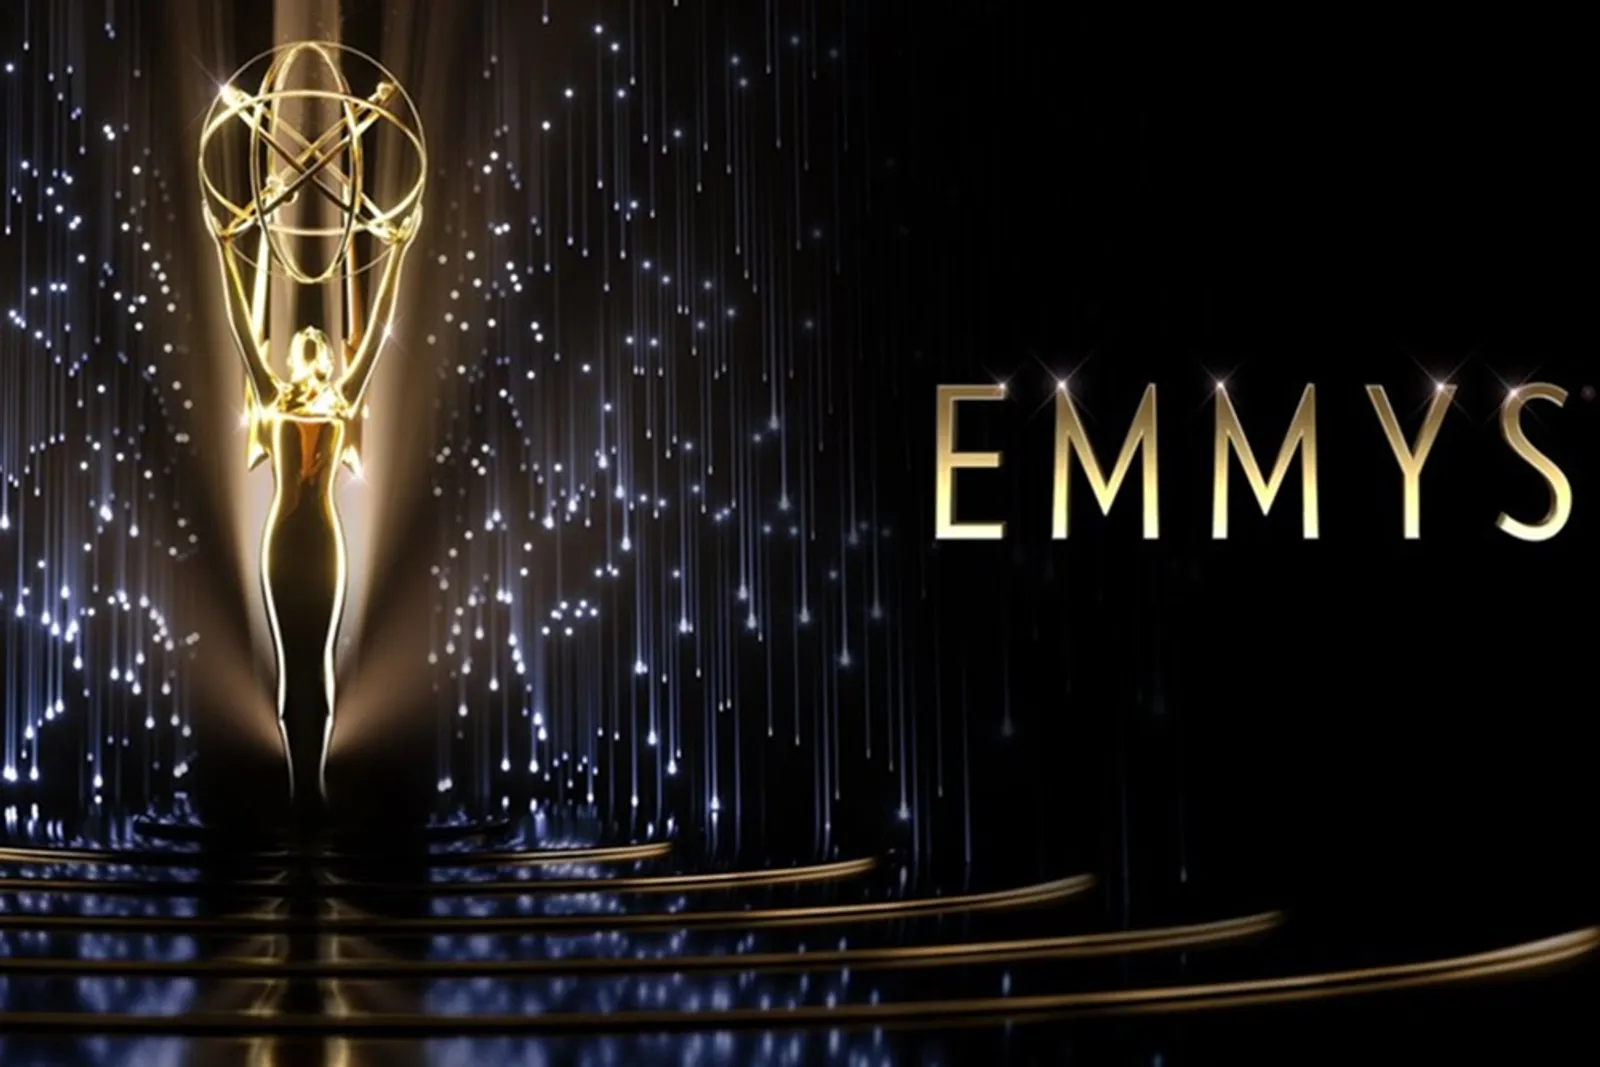 'Squid Game' Borong Nominasi Emmy Awards 2022, Cetak Sejarah Baru!